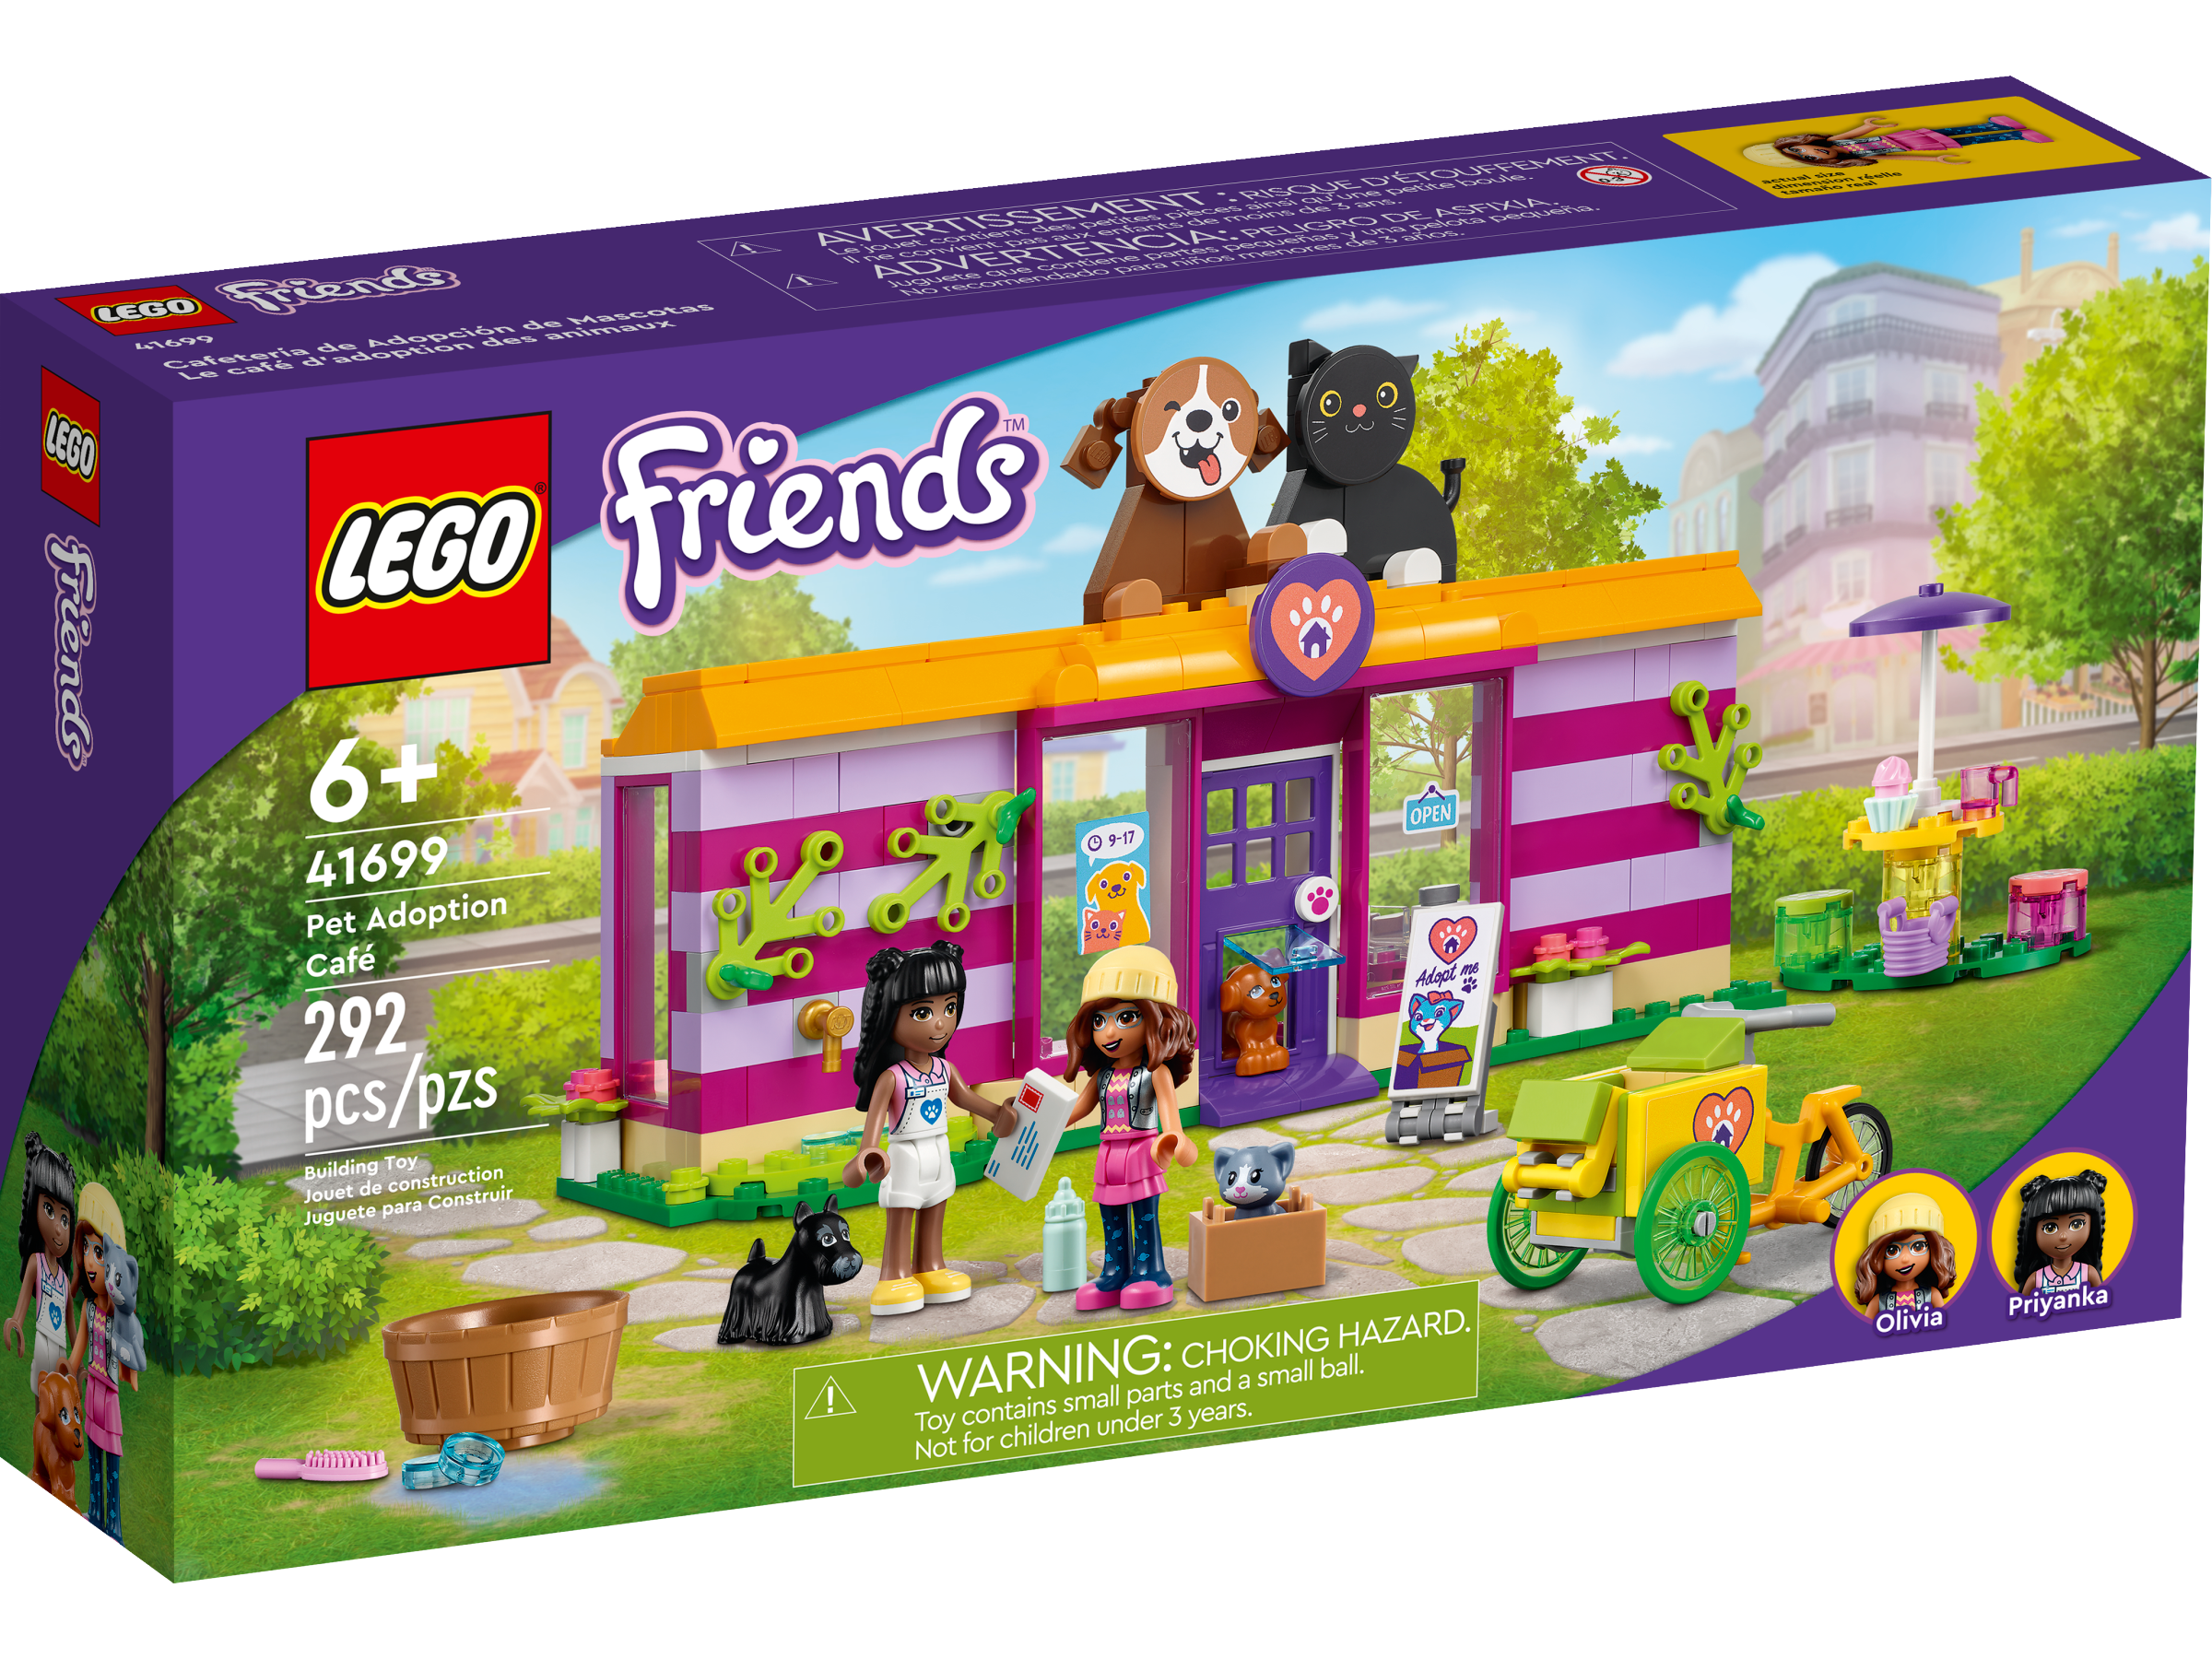 Конструктор LEGO Friends 41444: Органическое кафе Хартлейк-Сити